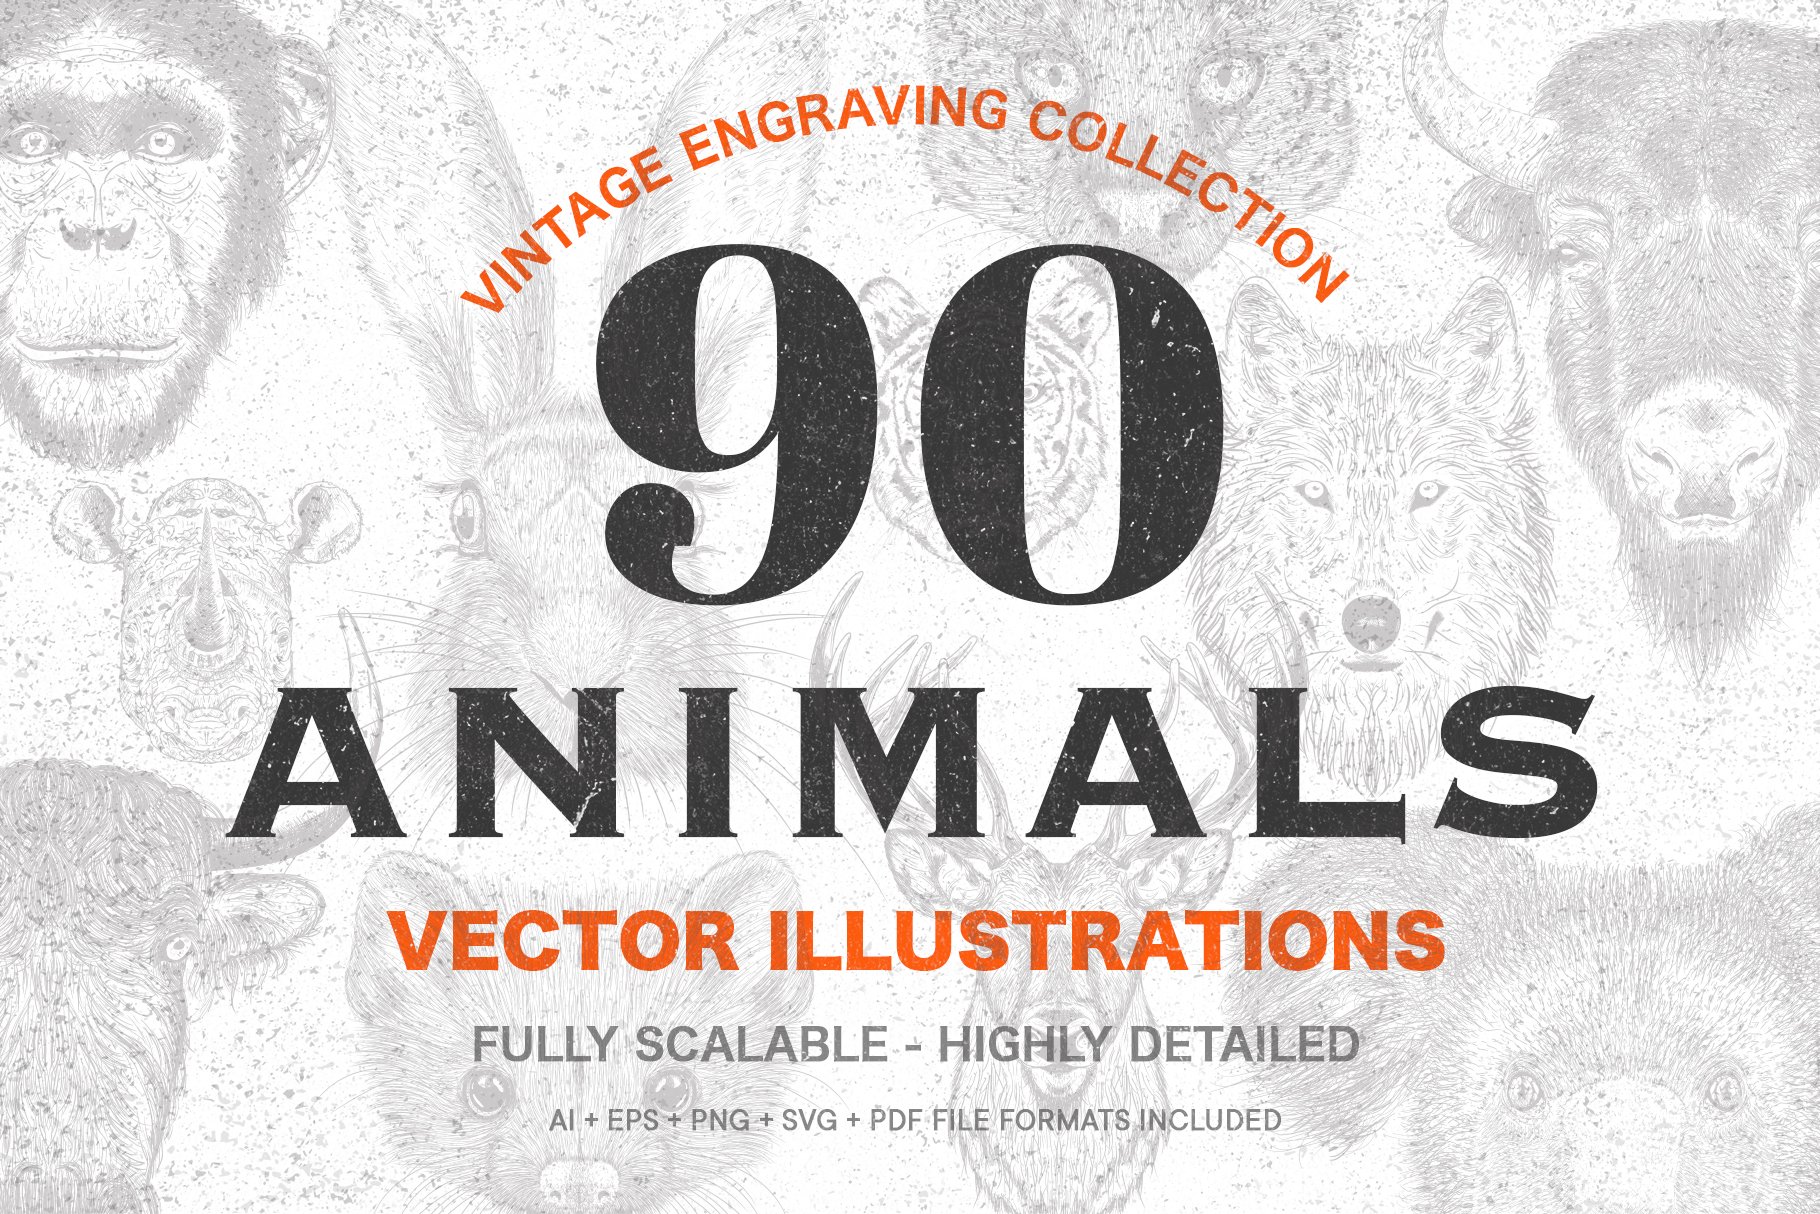 90 Animals Vintage Illustrations cover image.